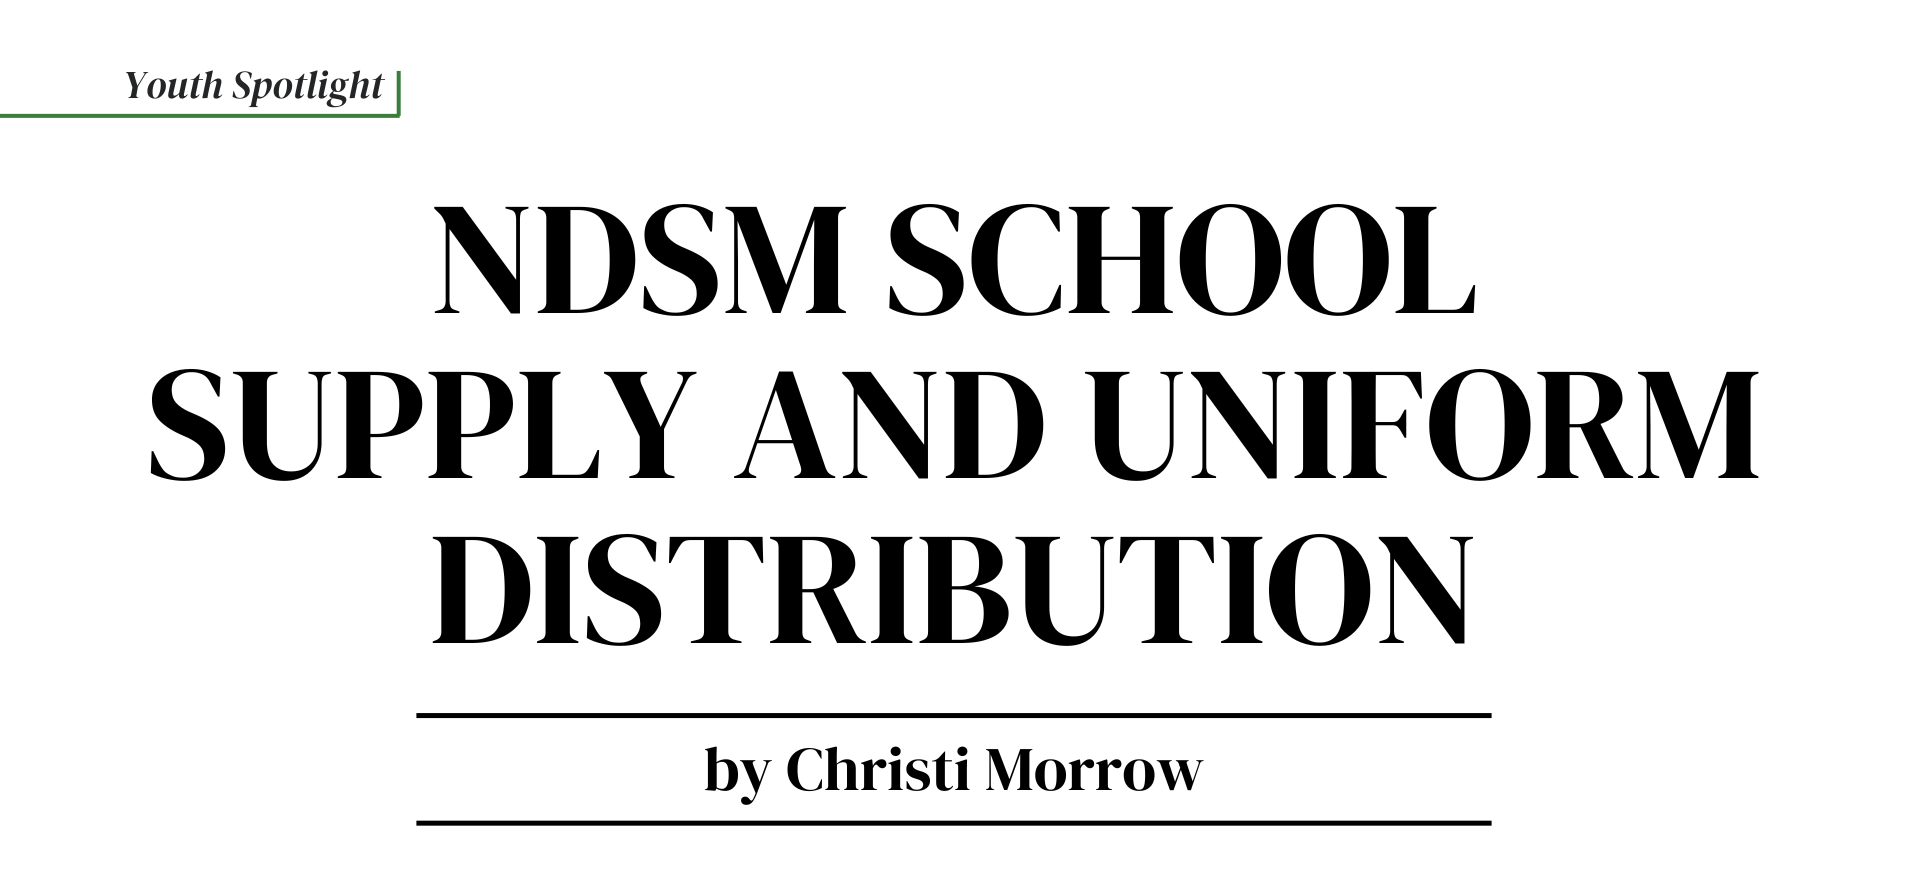 NDSM School Supply and Uniform Distribution by Christi Morrow